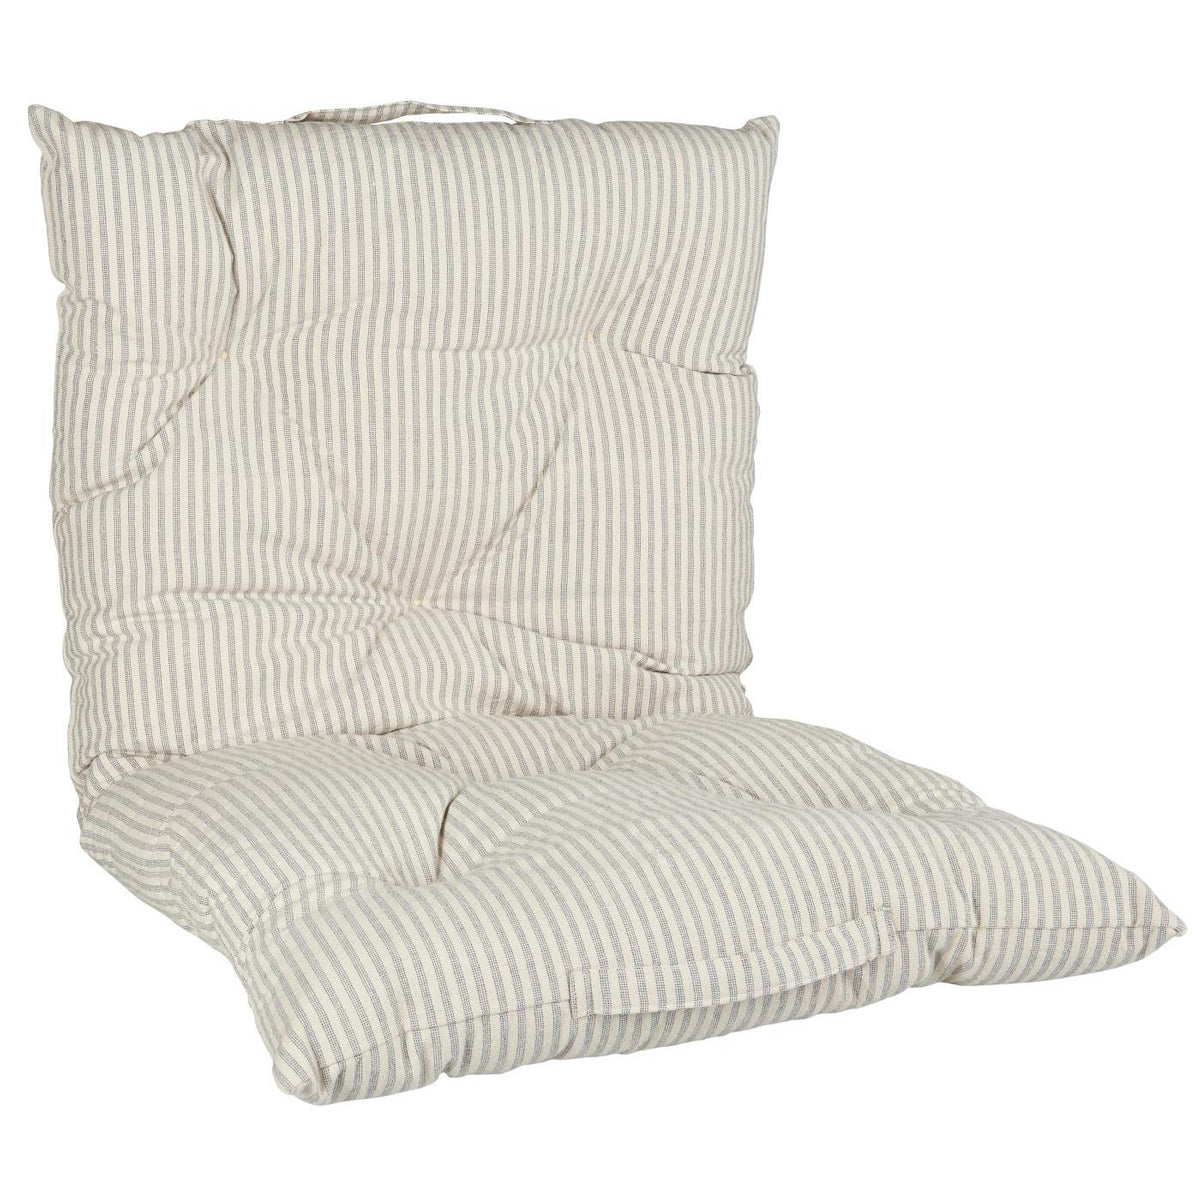 IB Laursen Mattress Cushion Asger Natural W/Thin Dusty Blue Stripes